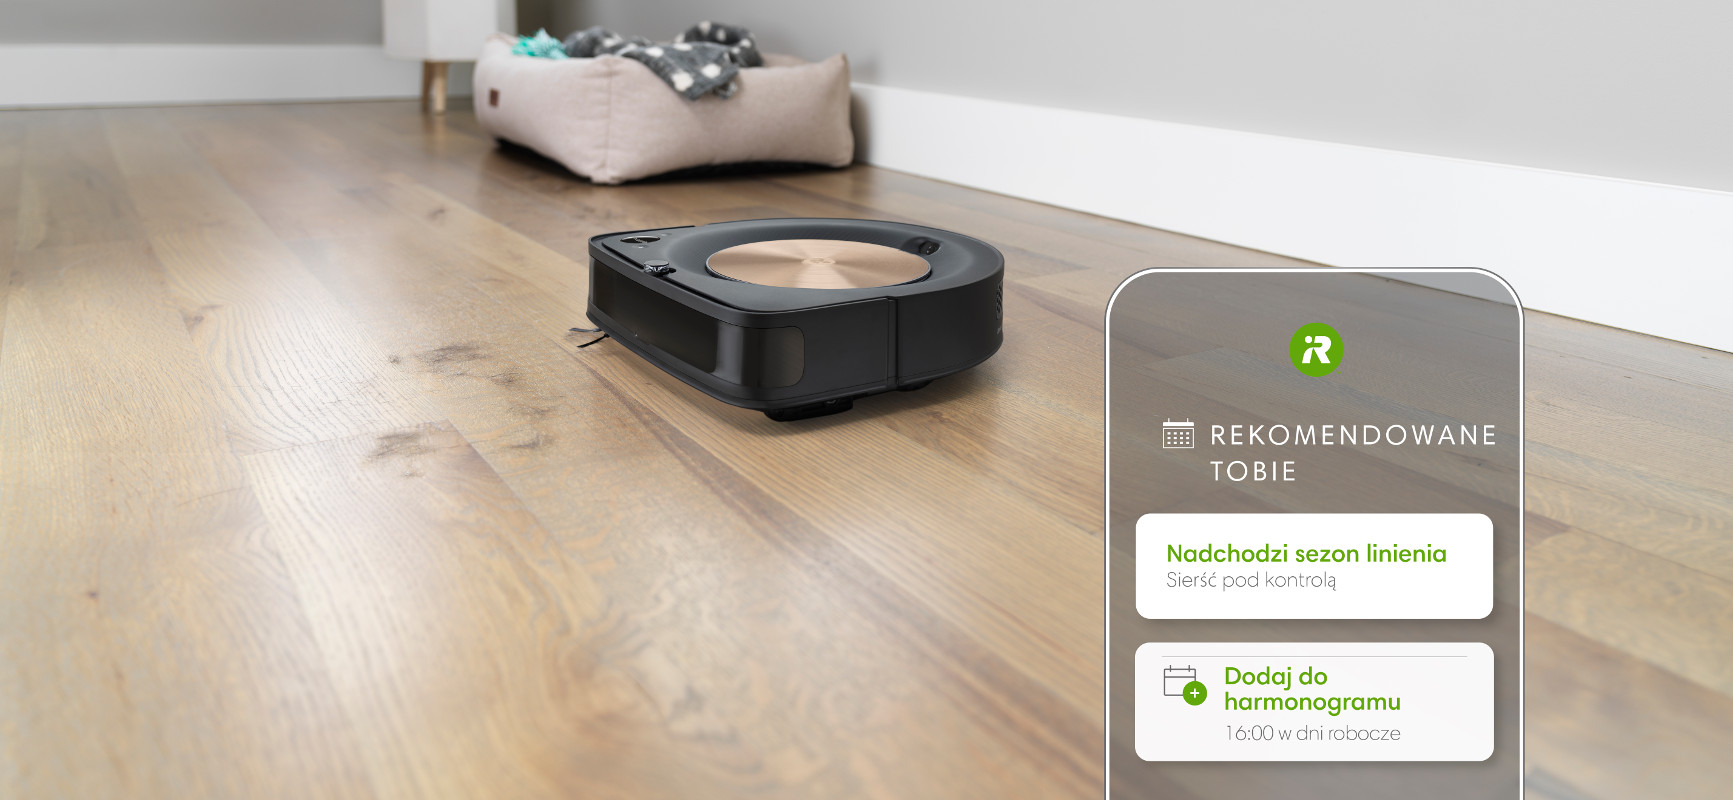 iRobot Roomba s9 personalizowane sugestie sprzątania